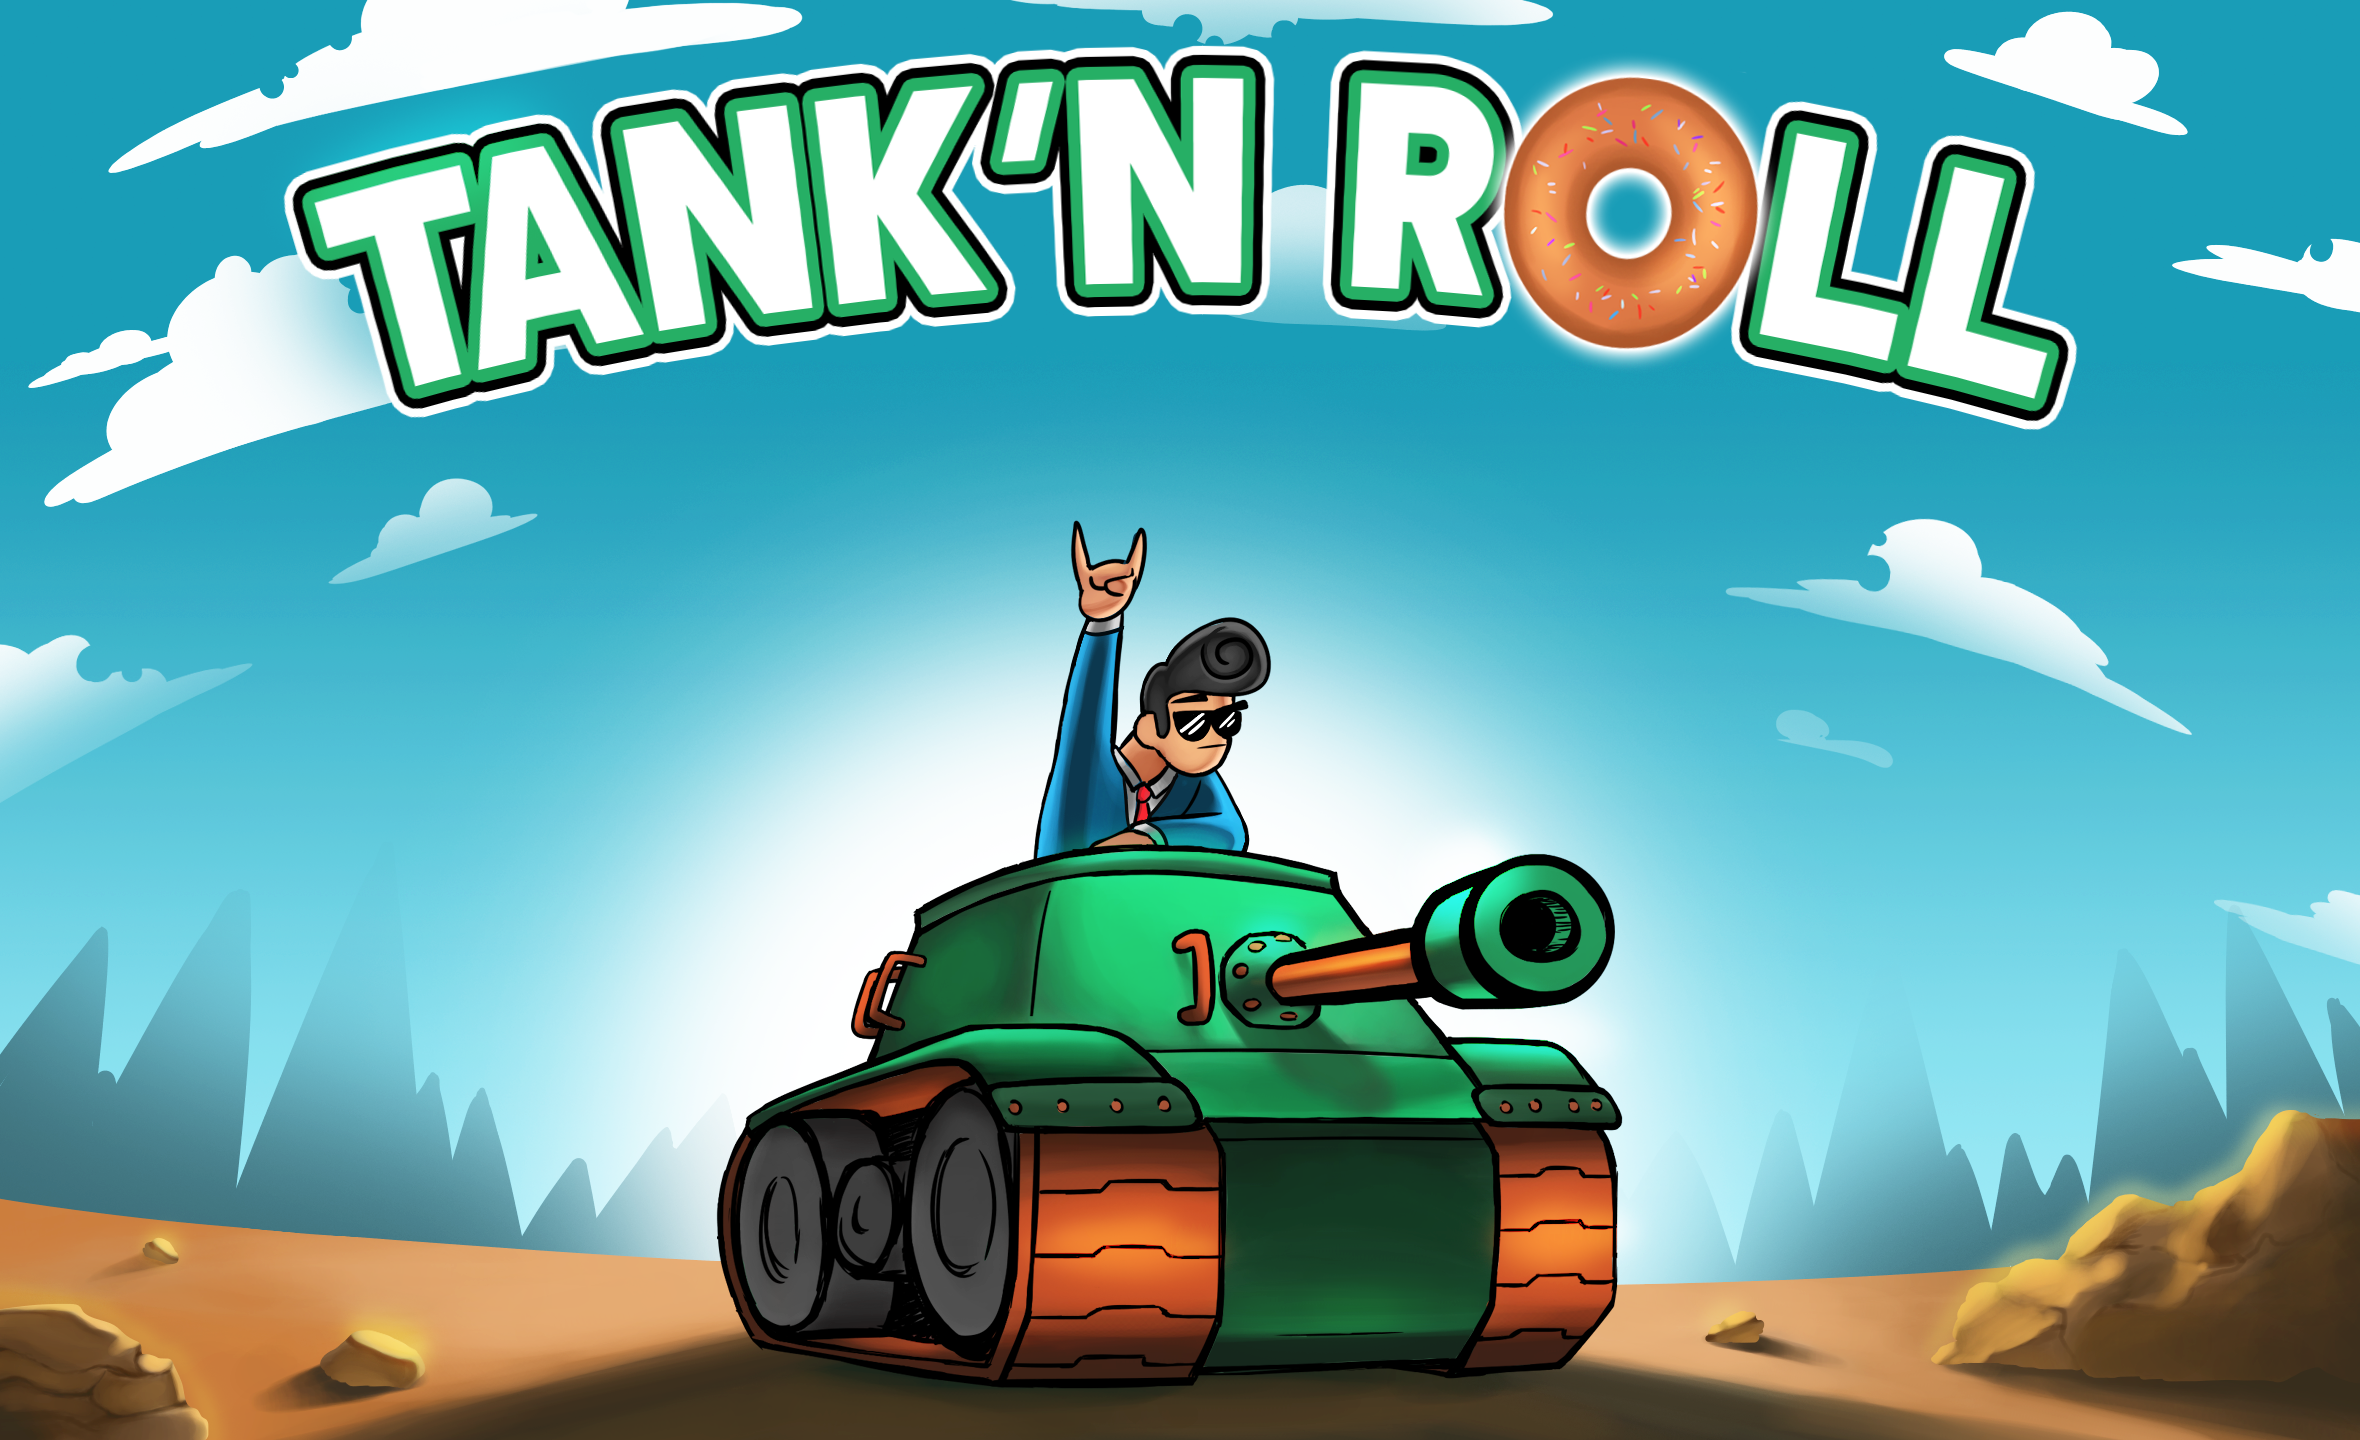 Tank'nRoll